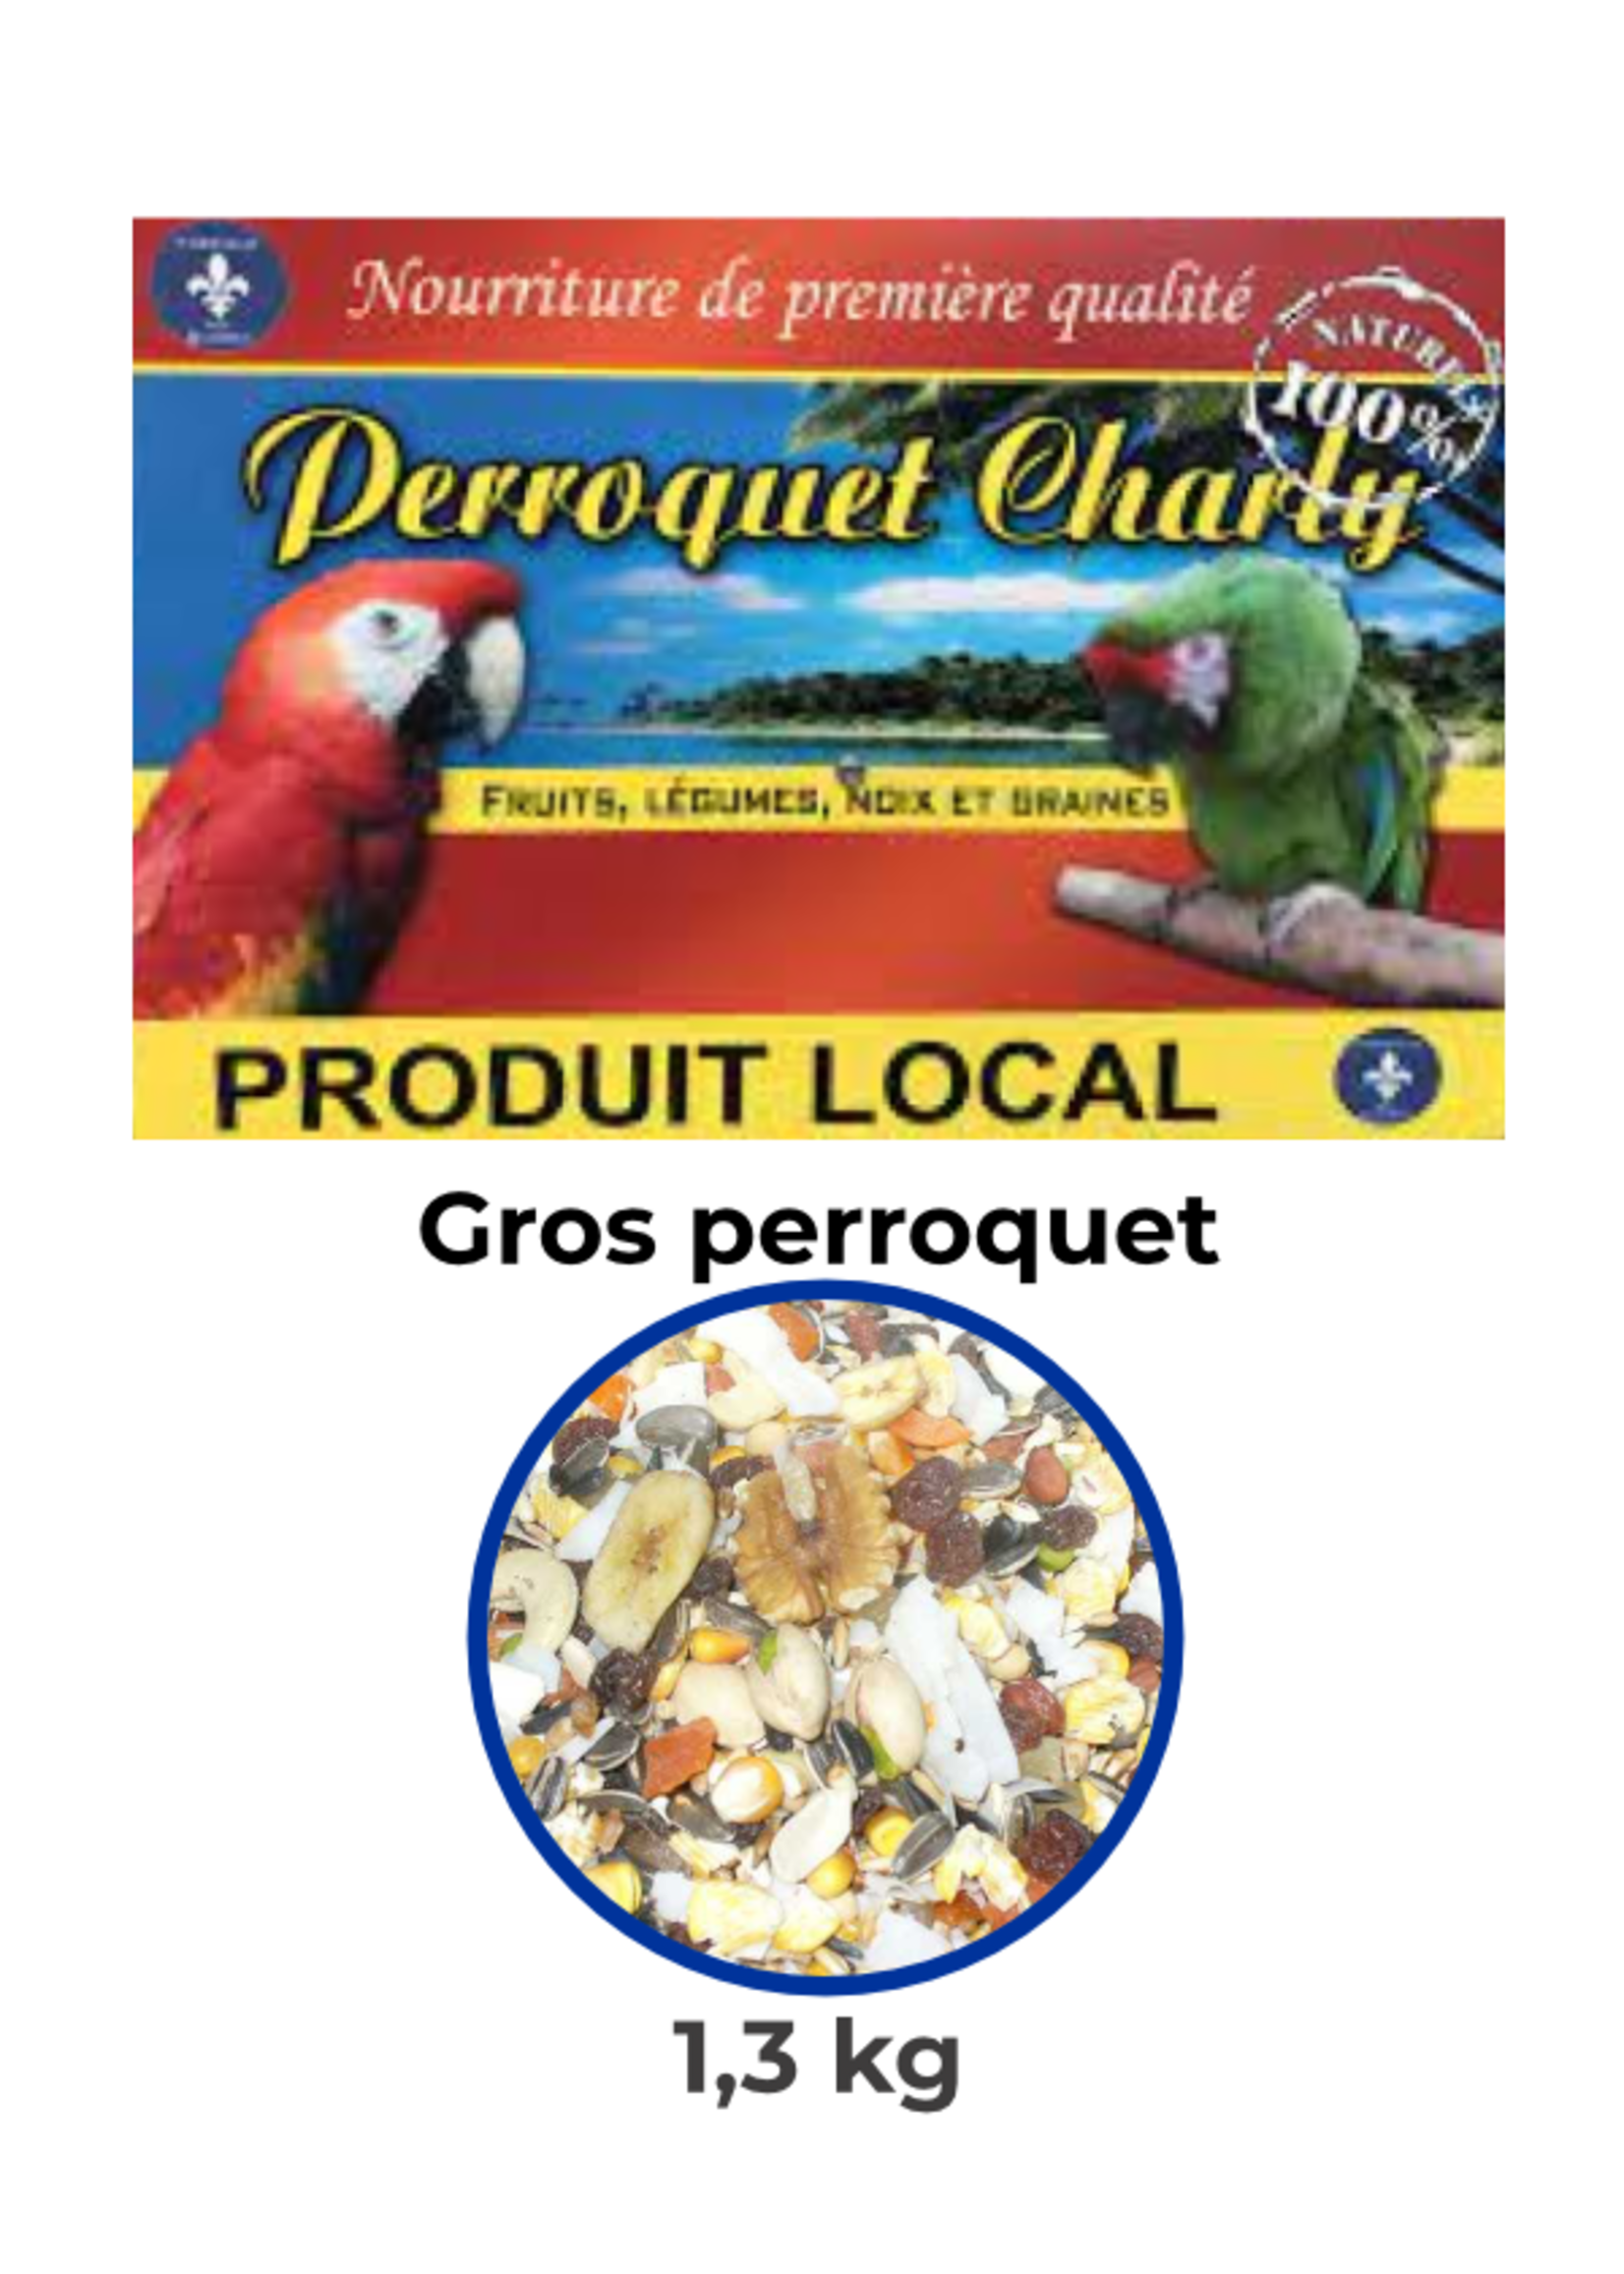 Perroquet Charly PC Nourriture complete fruit & noix gros perroquet, 1.3 kg